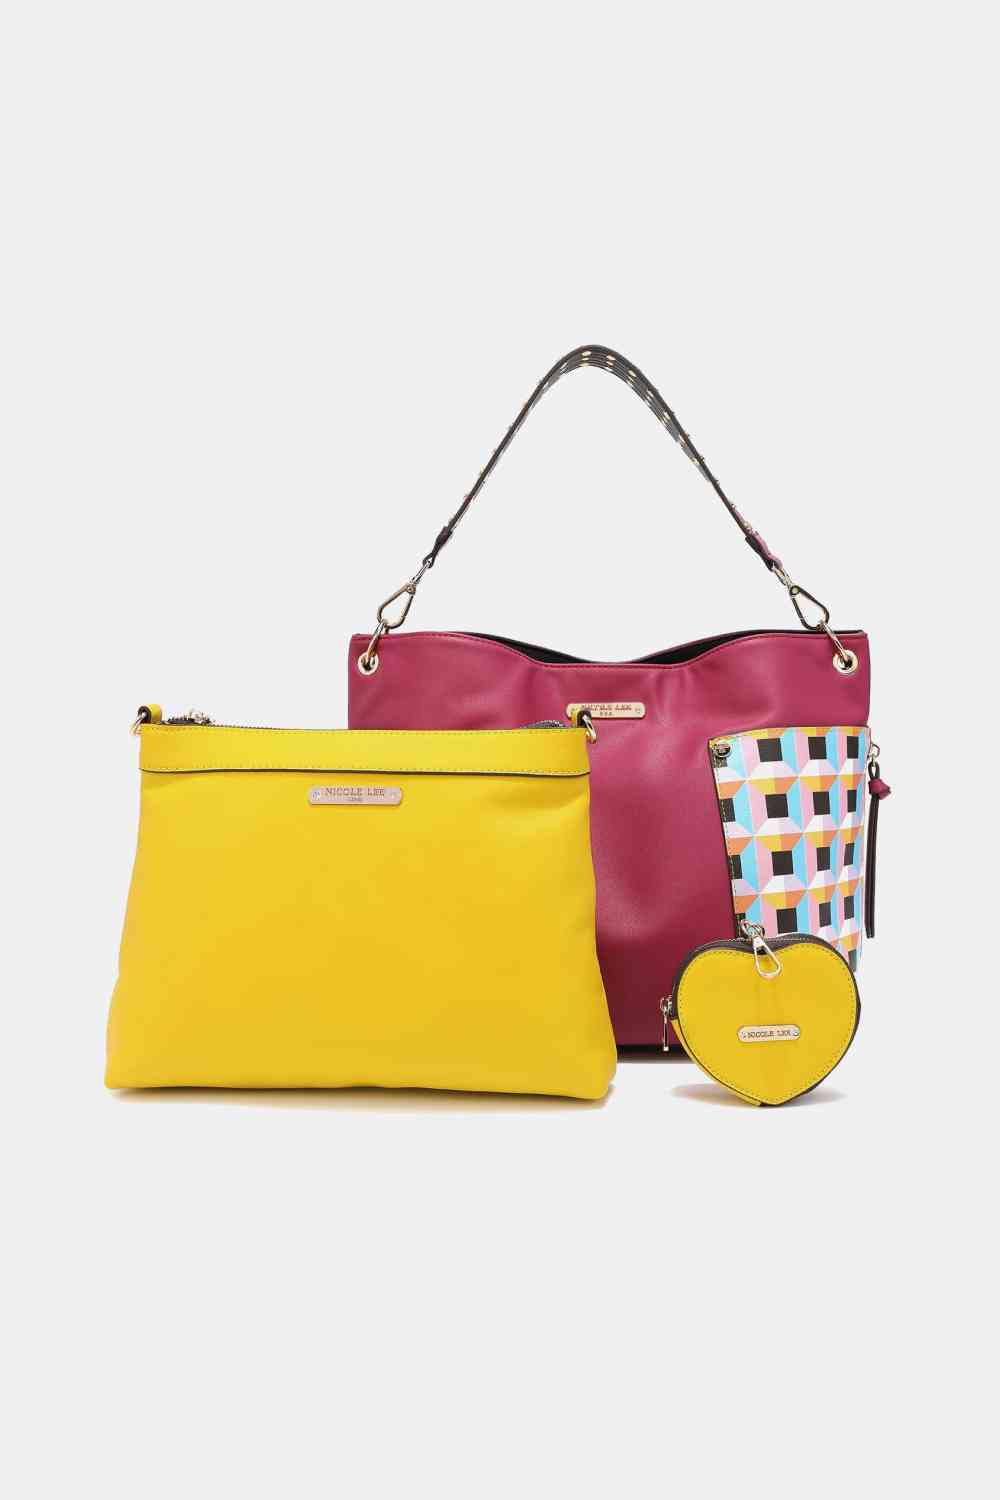 Nicole Lee USA Quihn 3-Piece Handbag Set - BEYOND FASHION